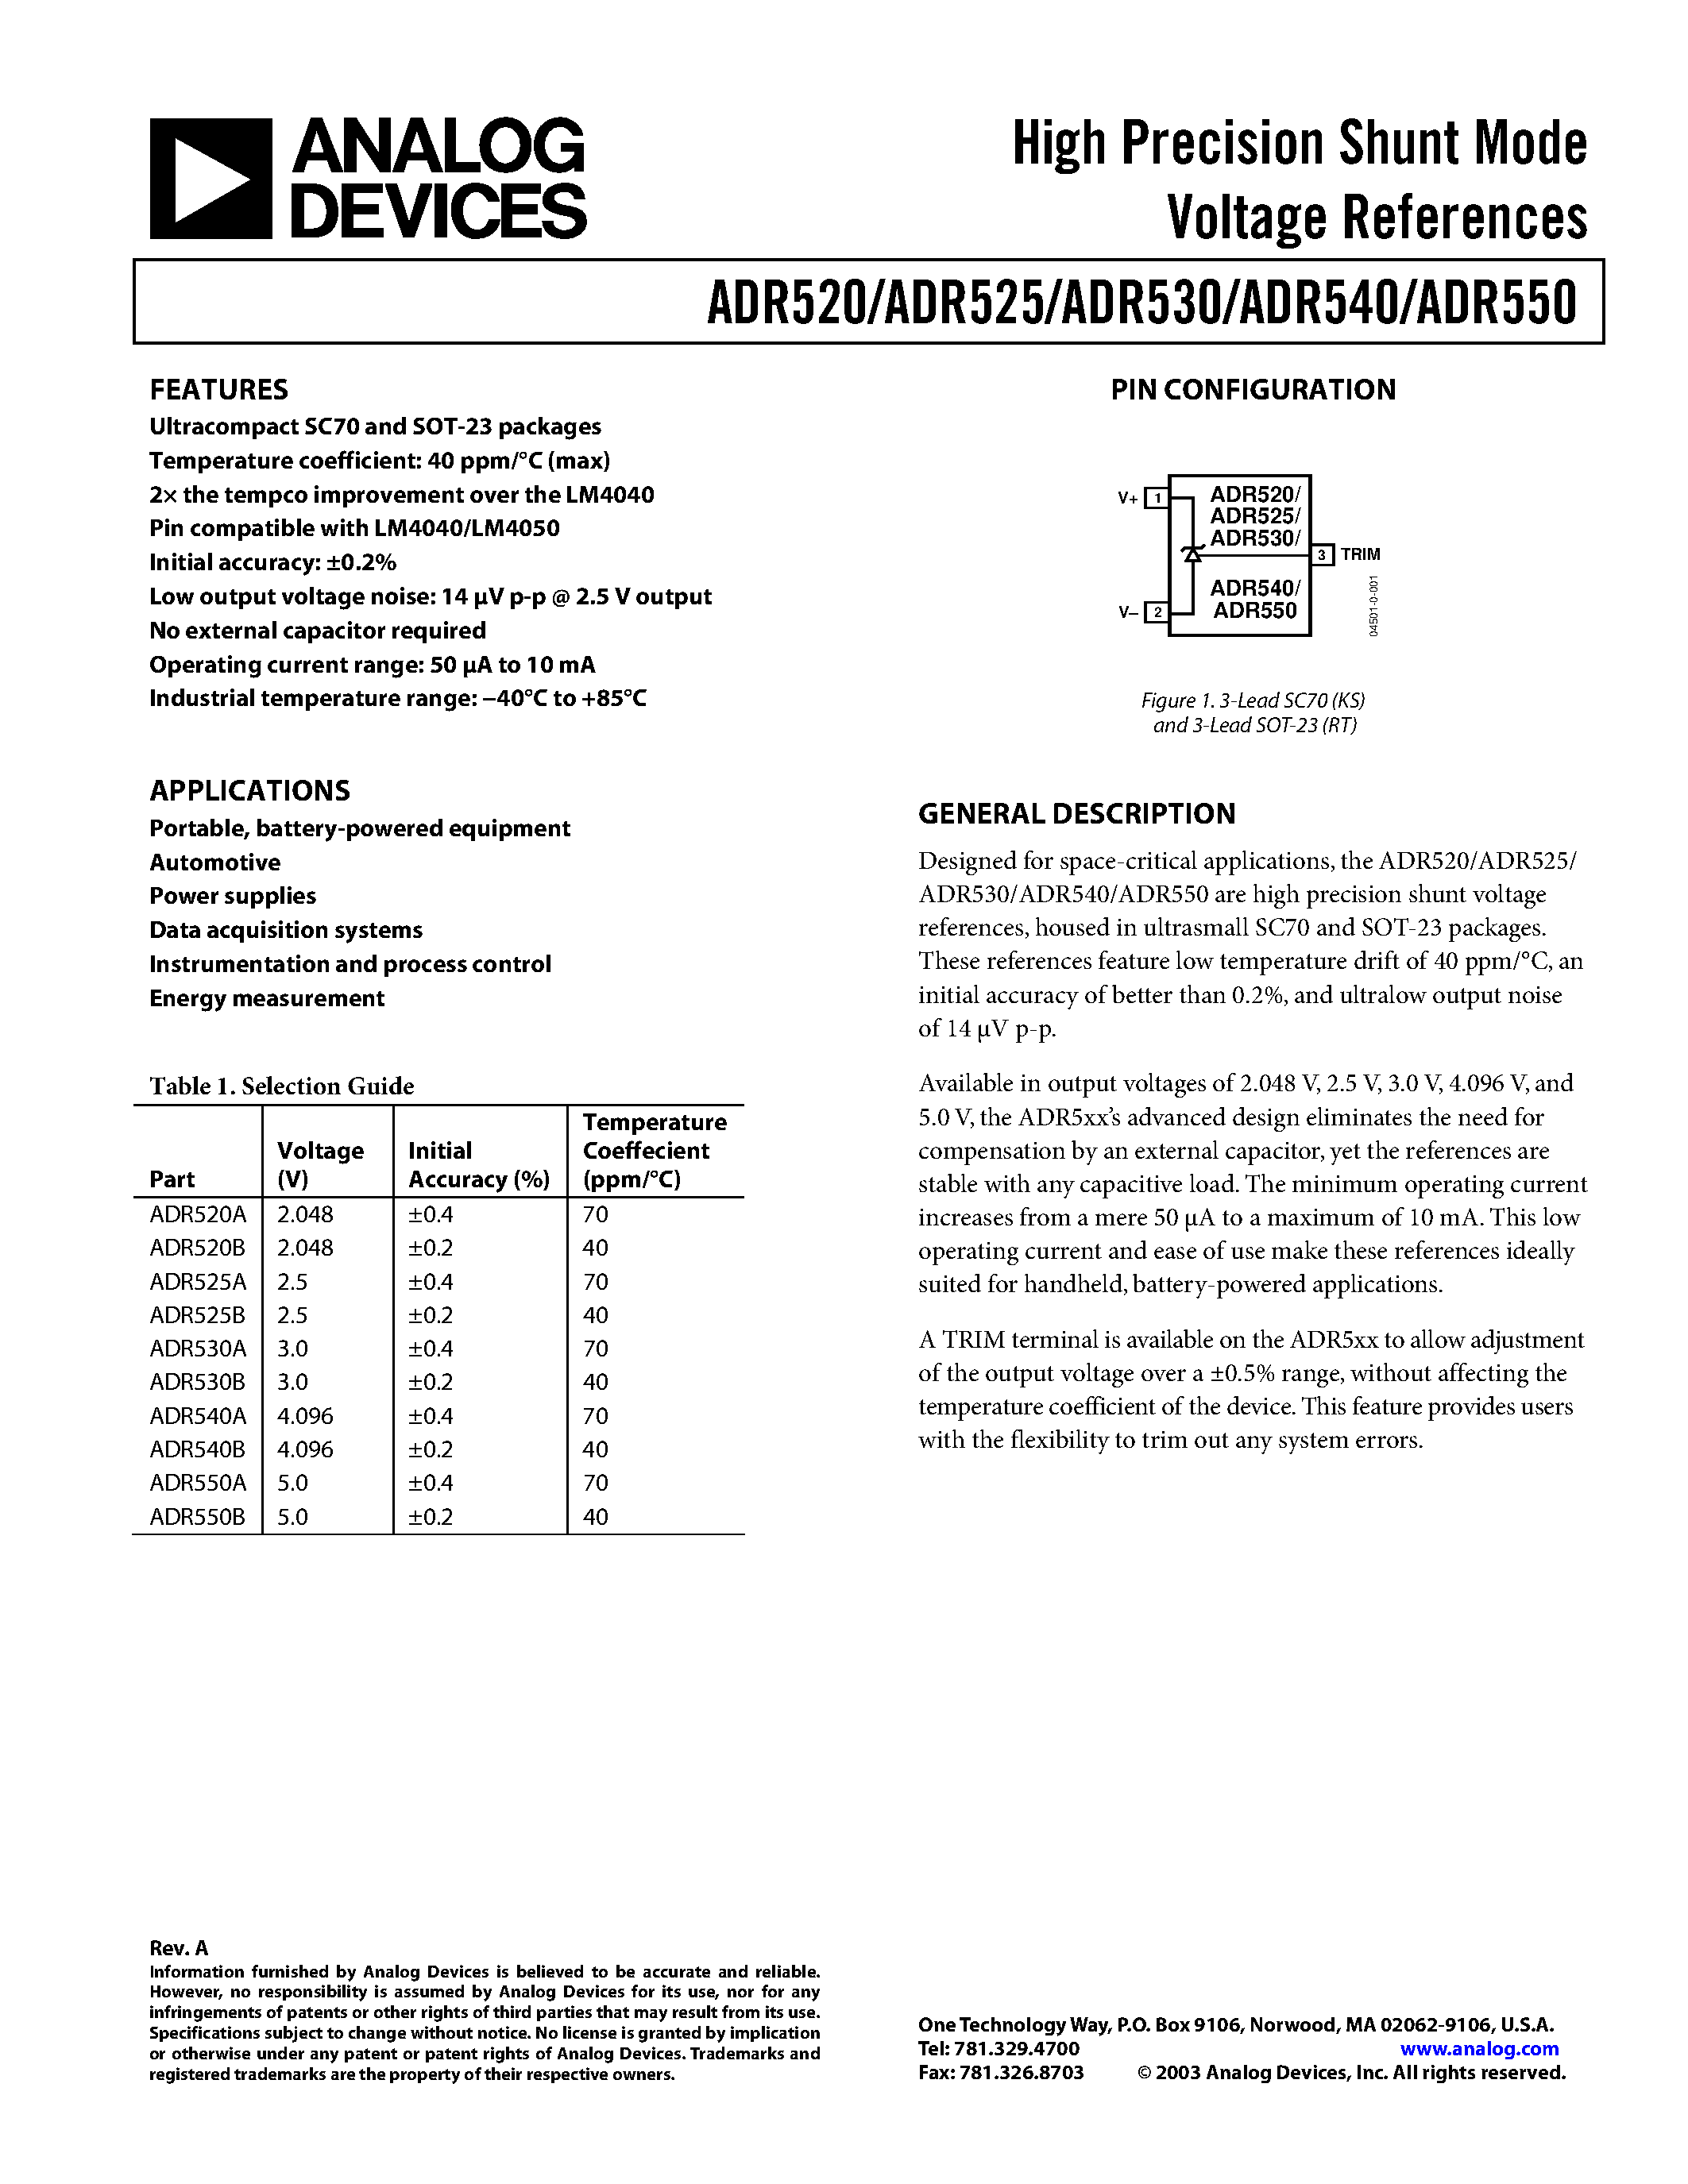 Даташит ADR540BRT-R2 - High Precision Shunt Mode Voltage References страница 1